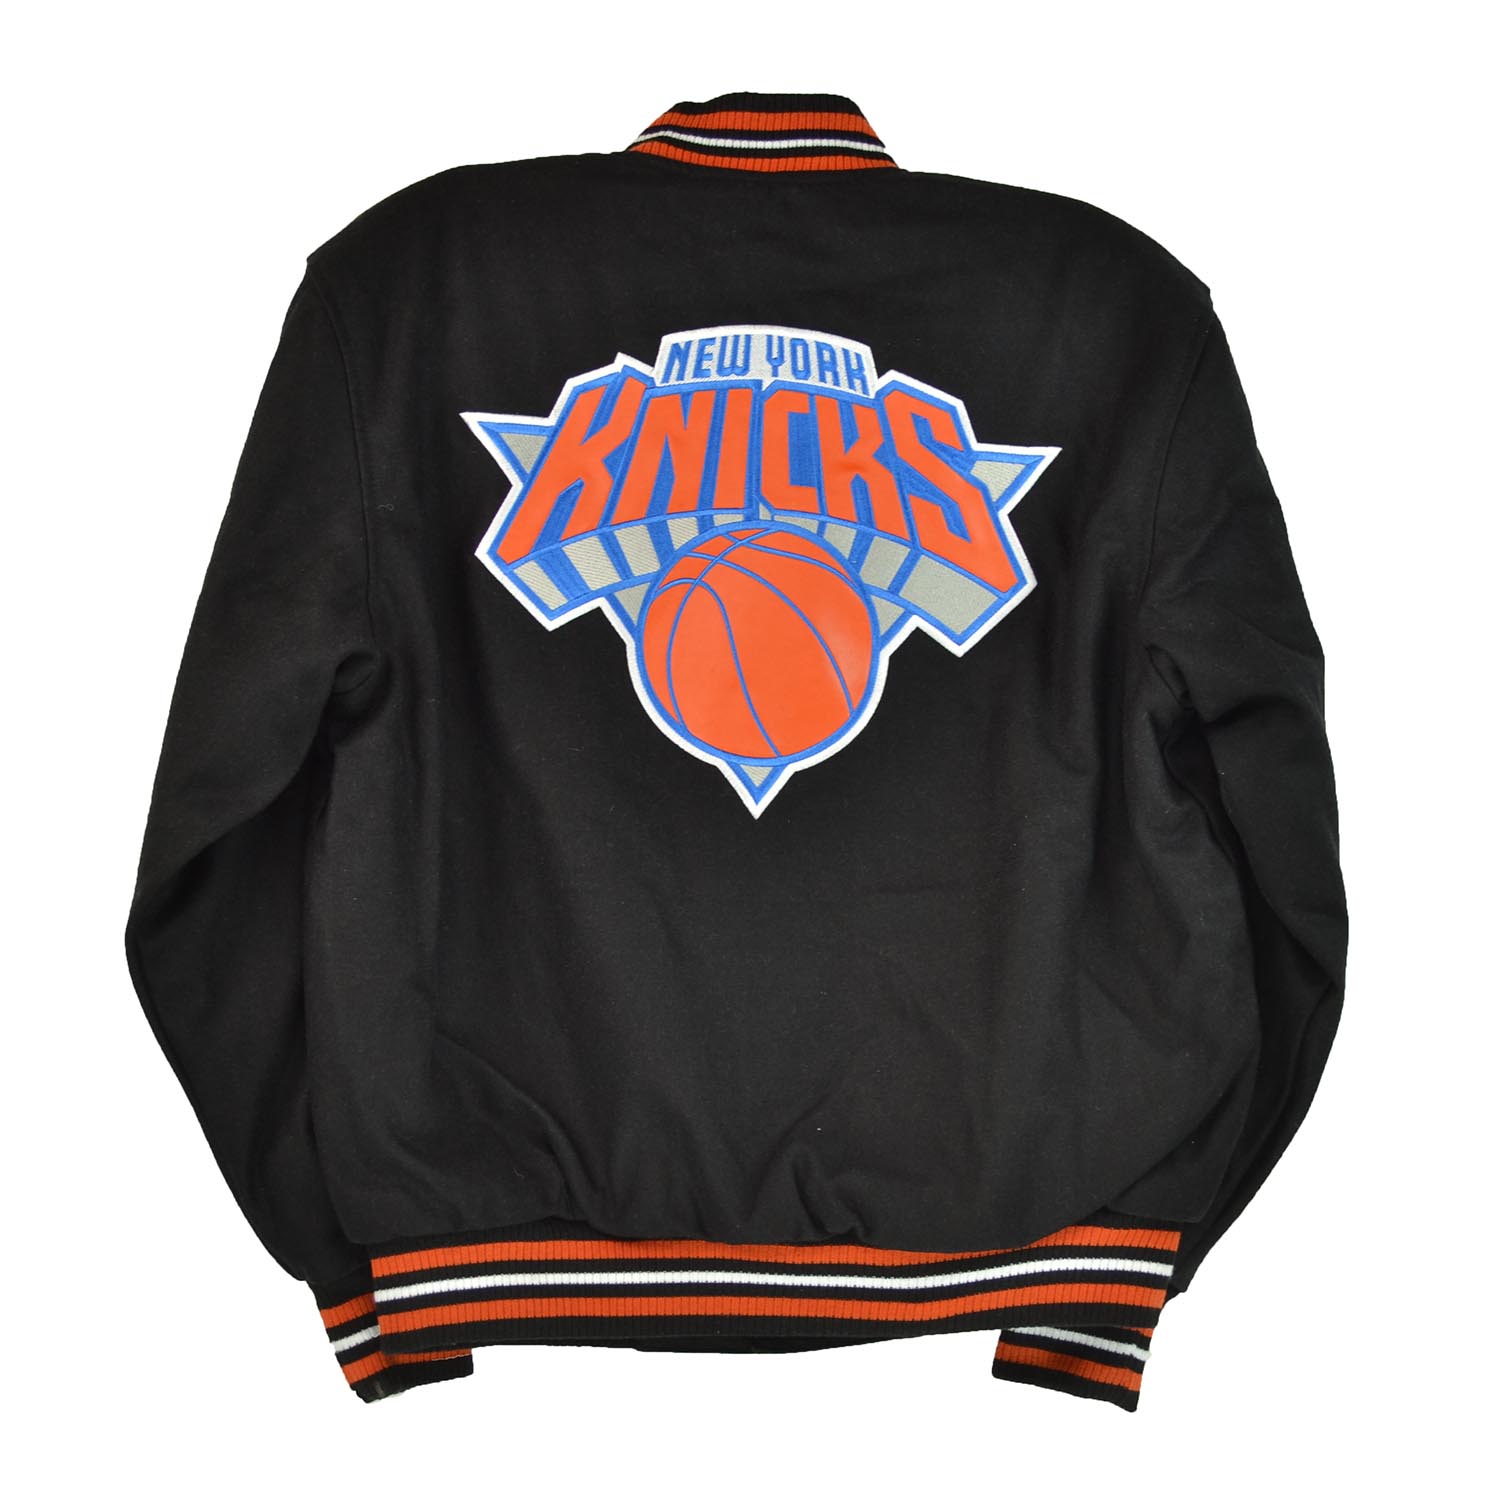 NBA New Tork Knicks Reversible Men's Jacket Black-Orange kni103rev2-blk ...